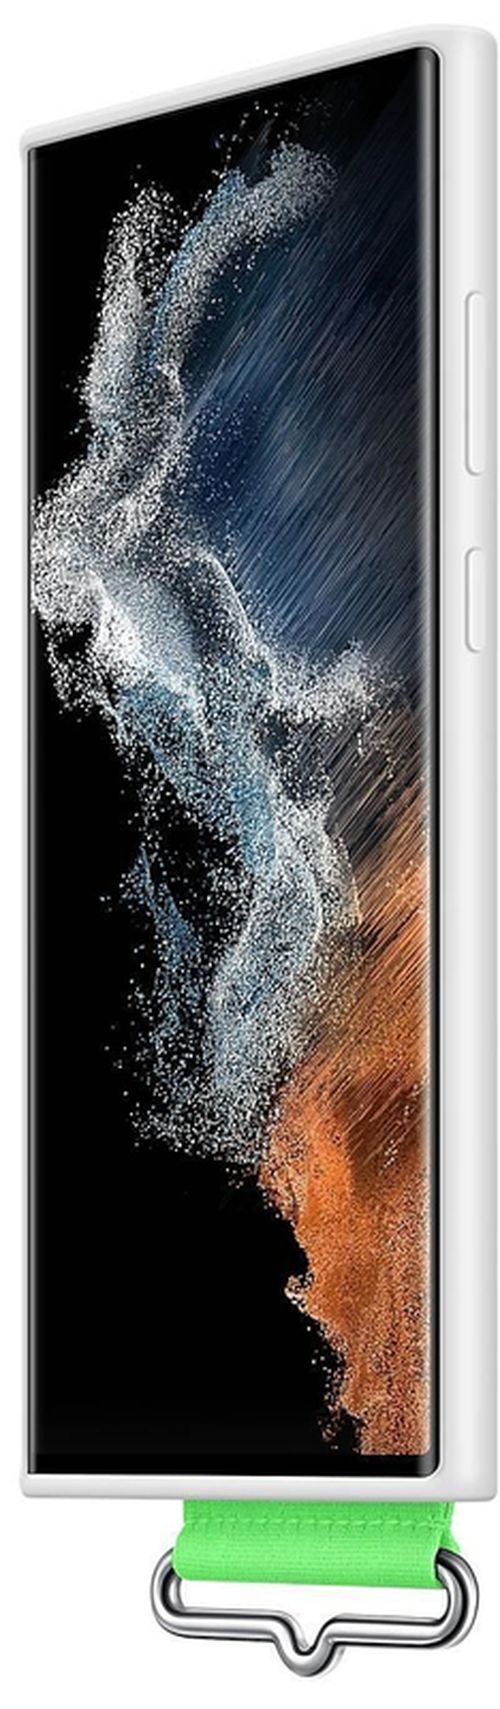 купить Чехол для смартфона Samsung EF-GS908 Silicone with Strap Cover White в Кишинёве 